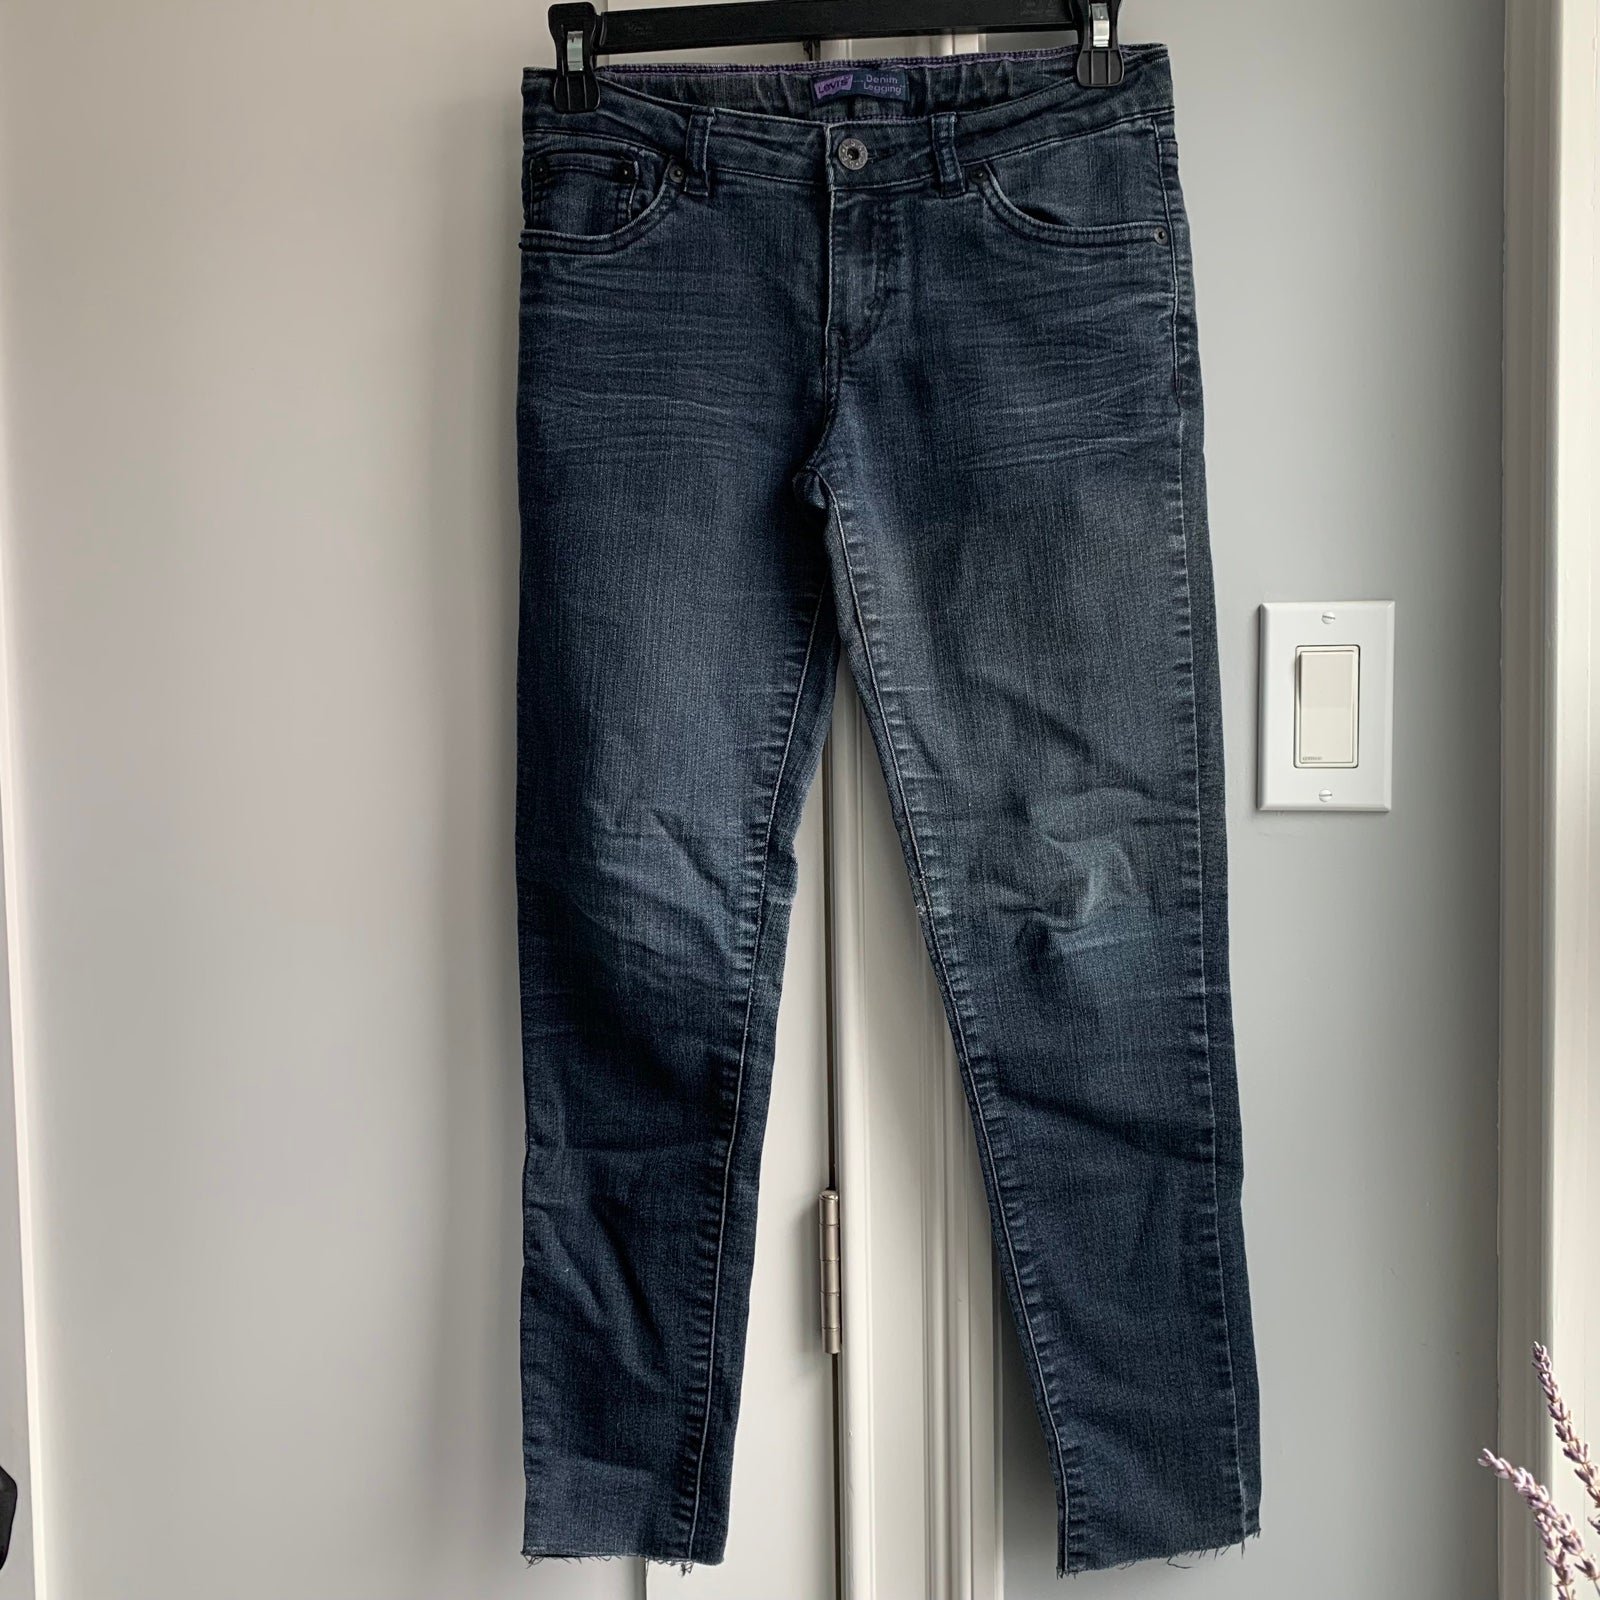 Authentic Levi’s skinny jeans blackish gray waist 26” G